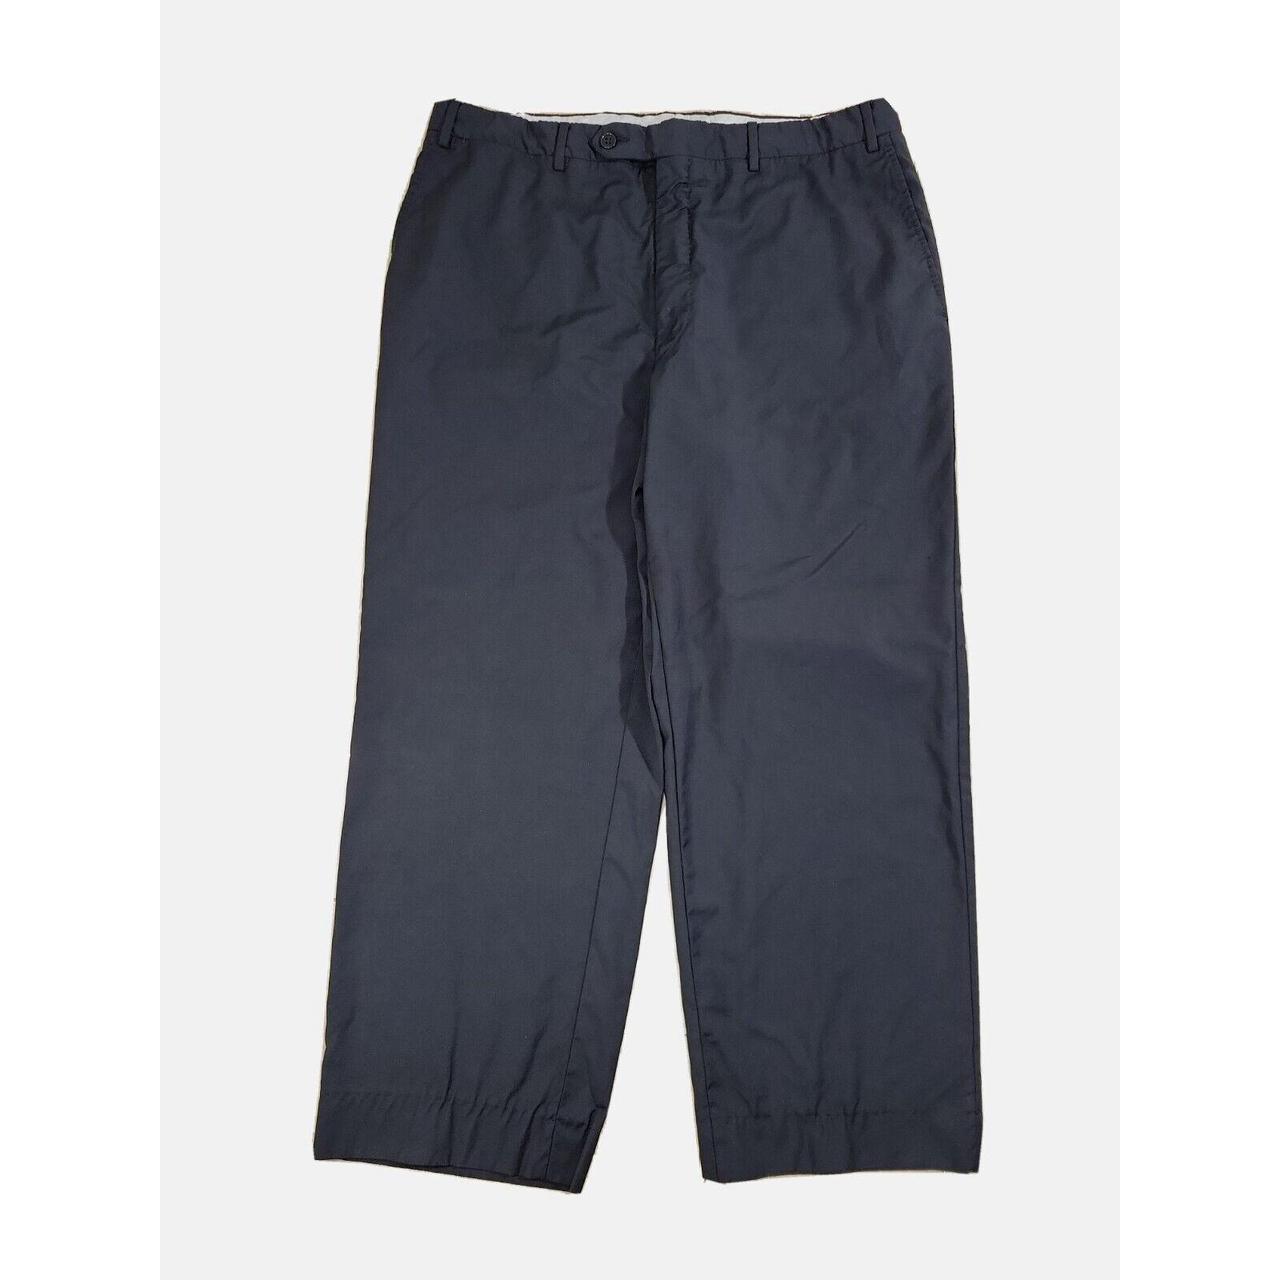 Product Image 1 - Canali Men's Size 34 Pants